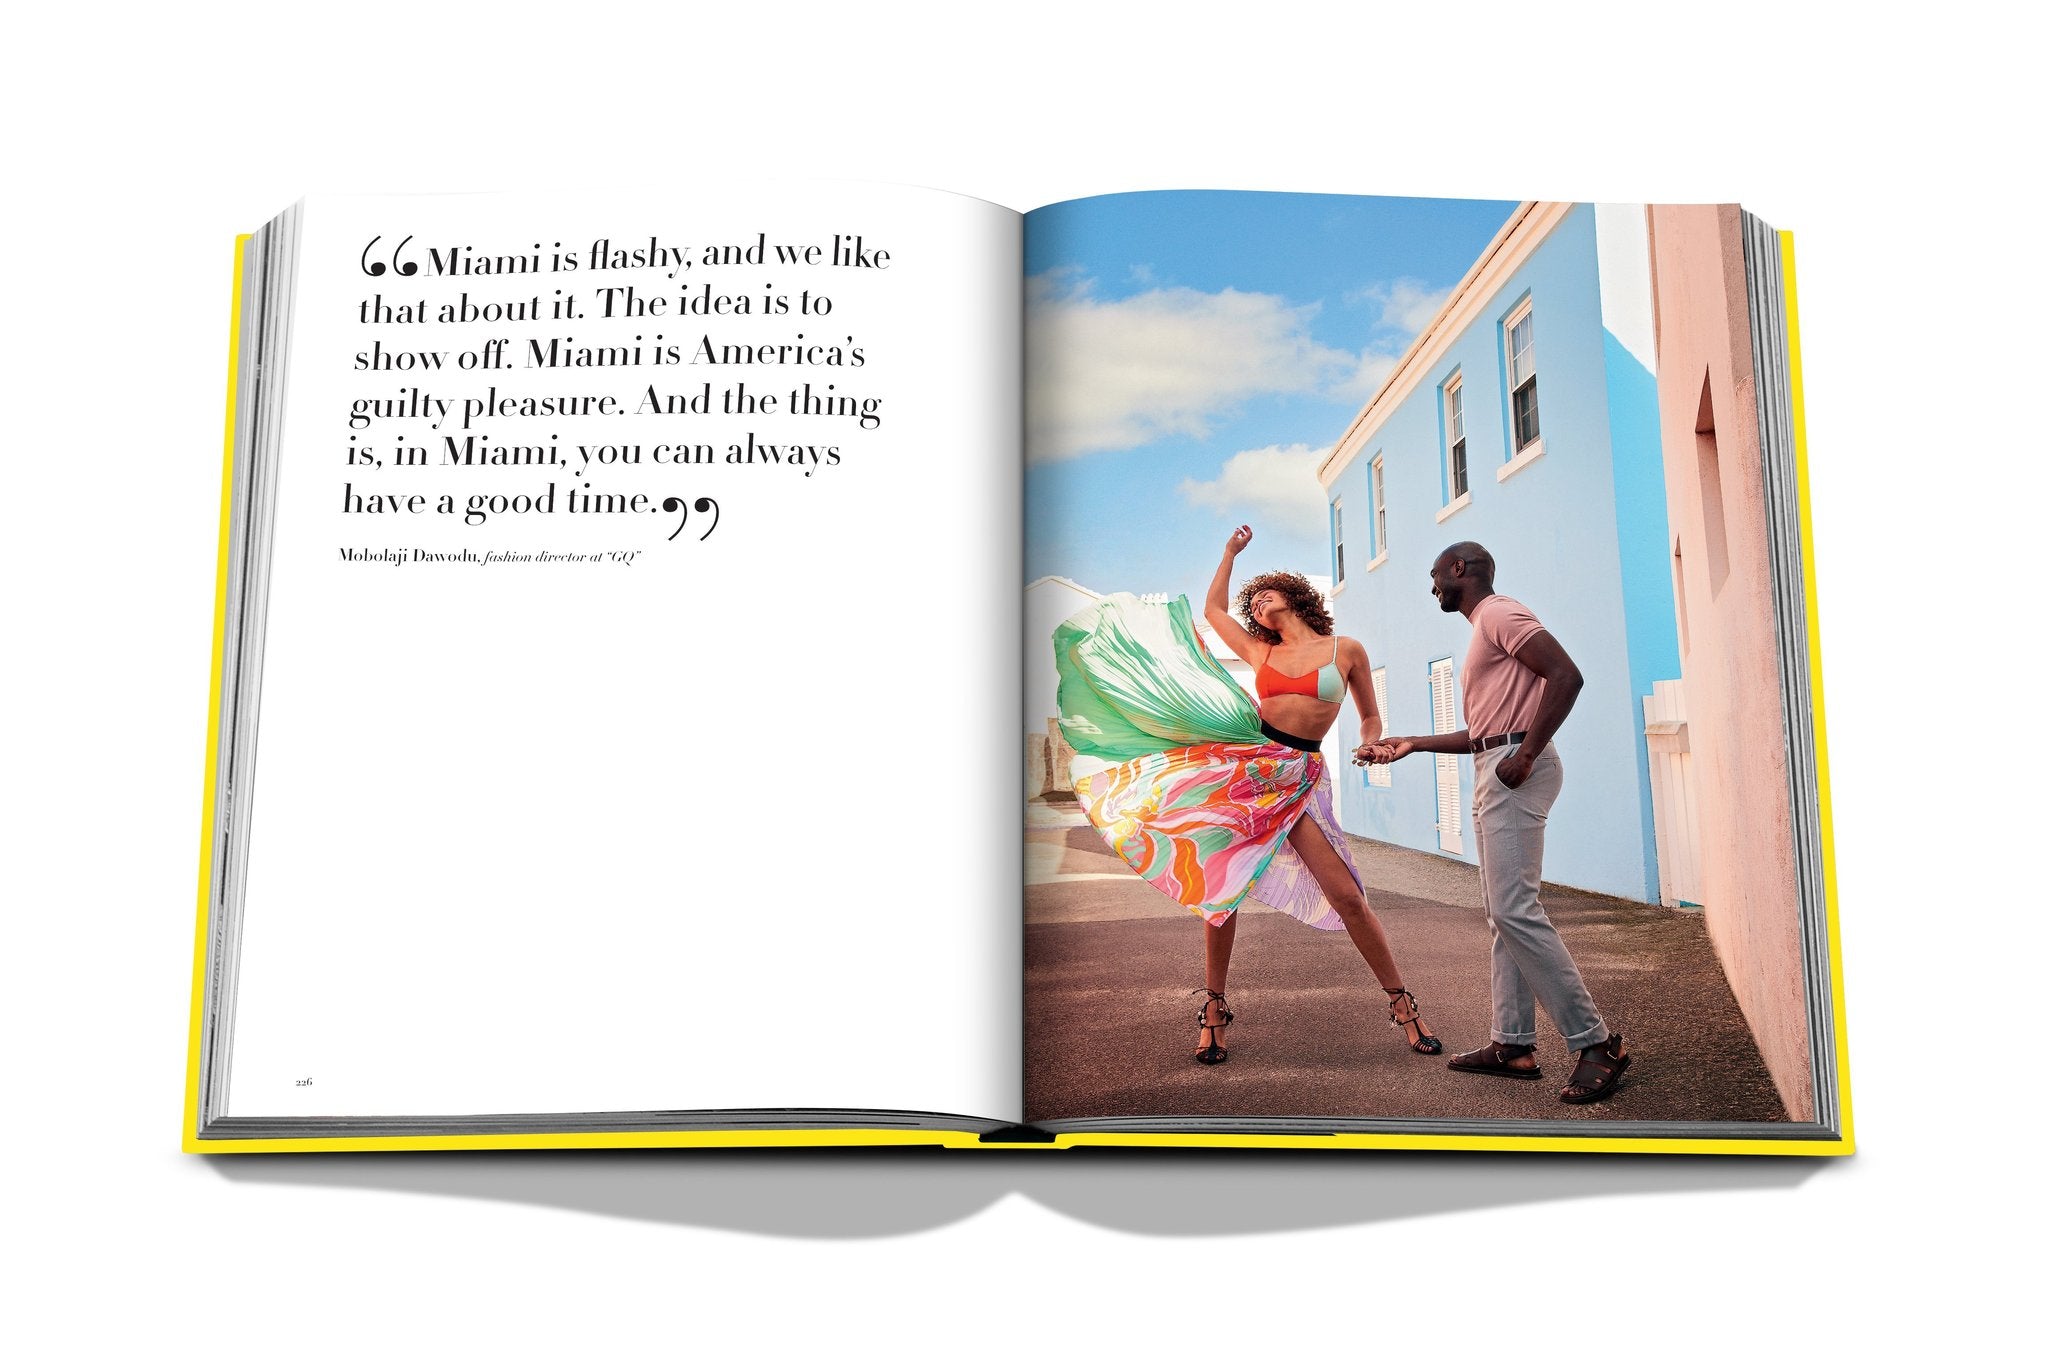 ASSOULINE Miami Beach Hardcover Book by Horacio Silva